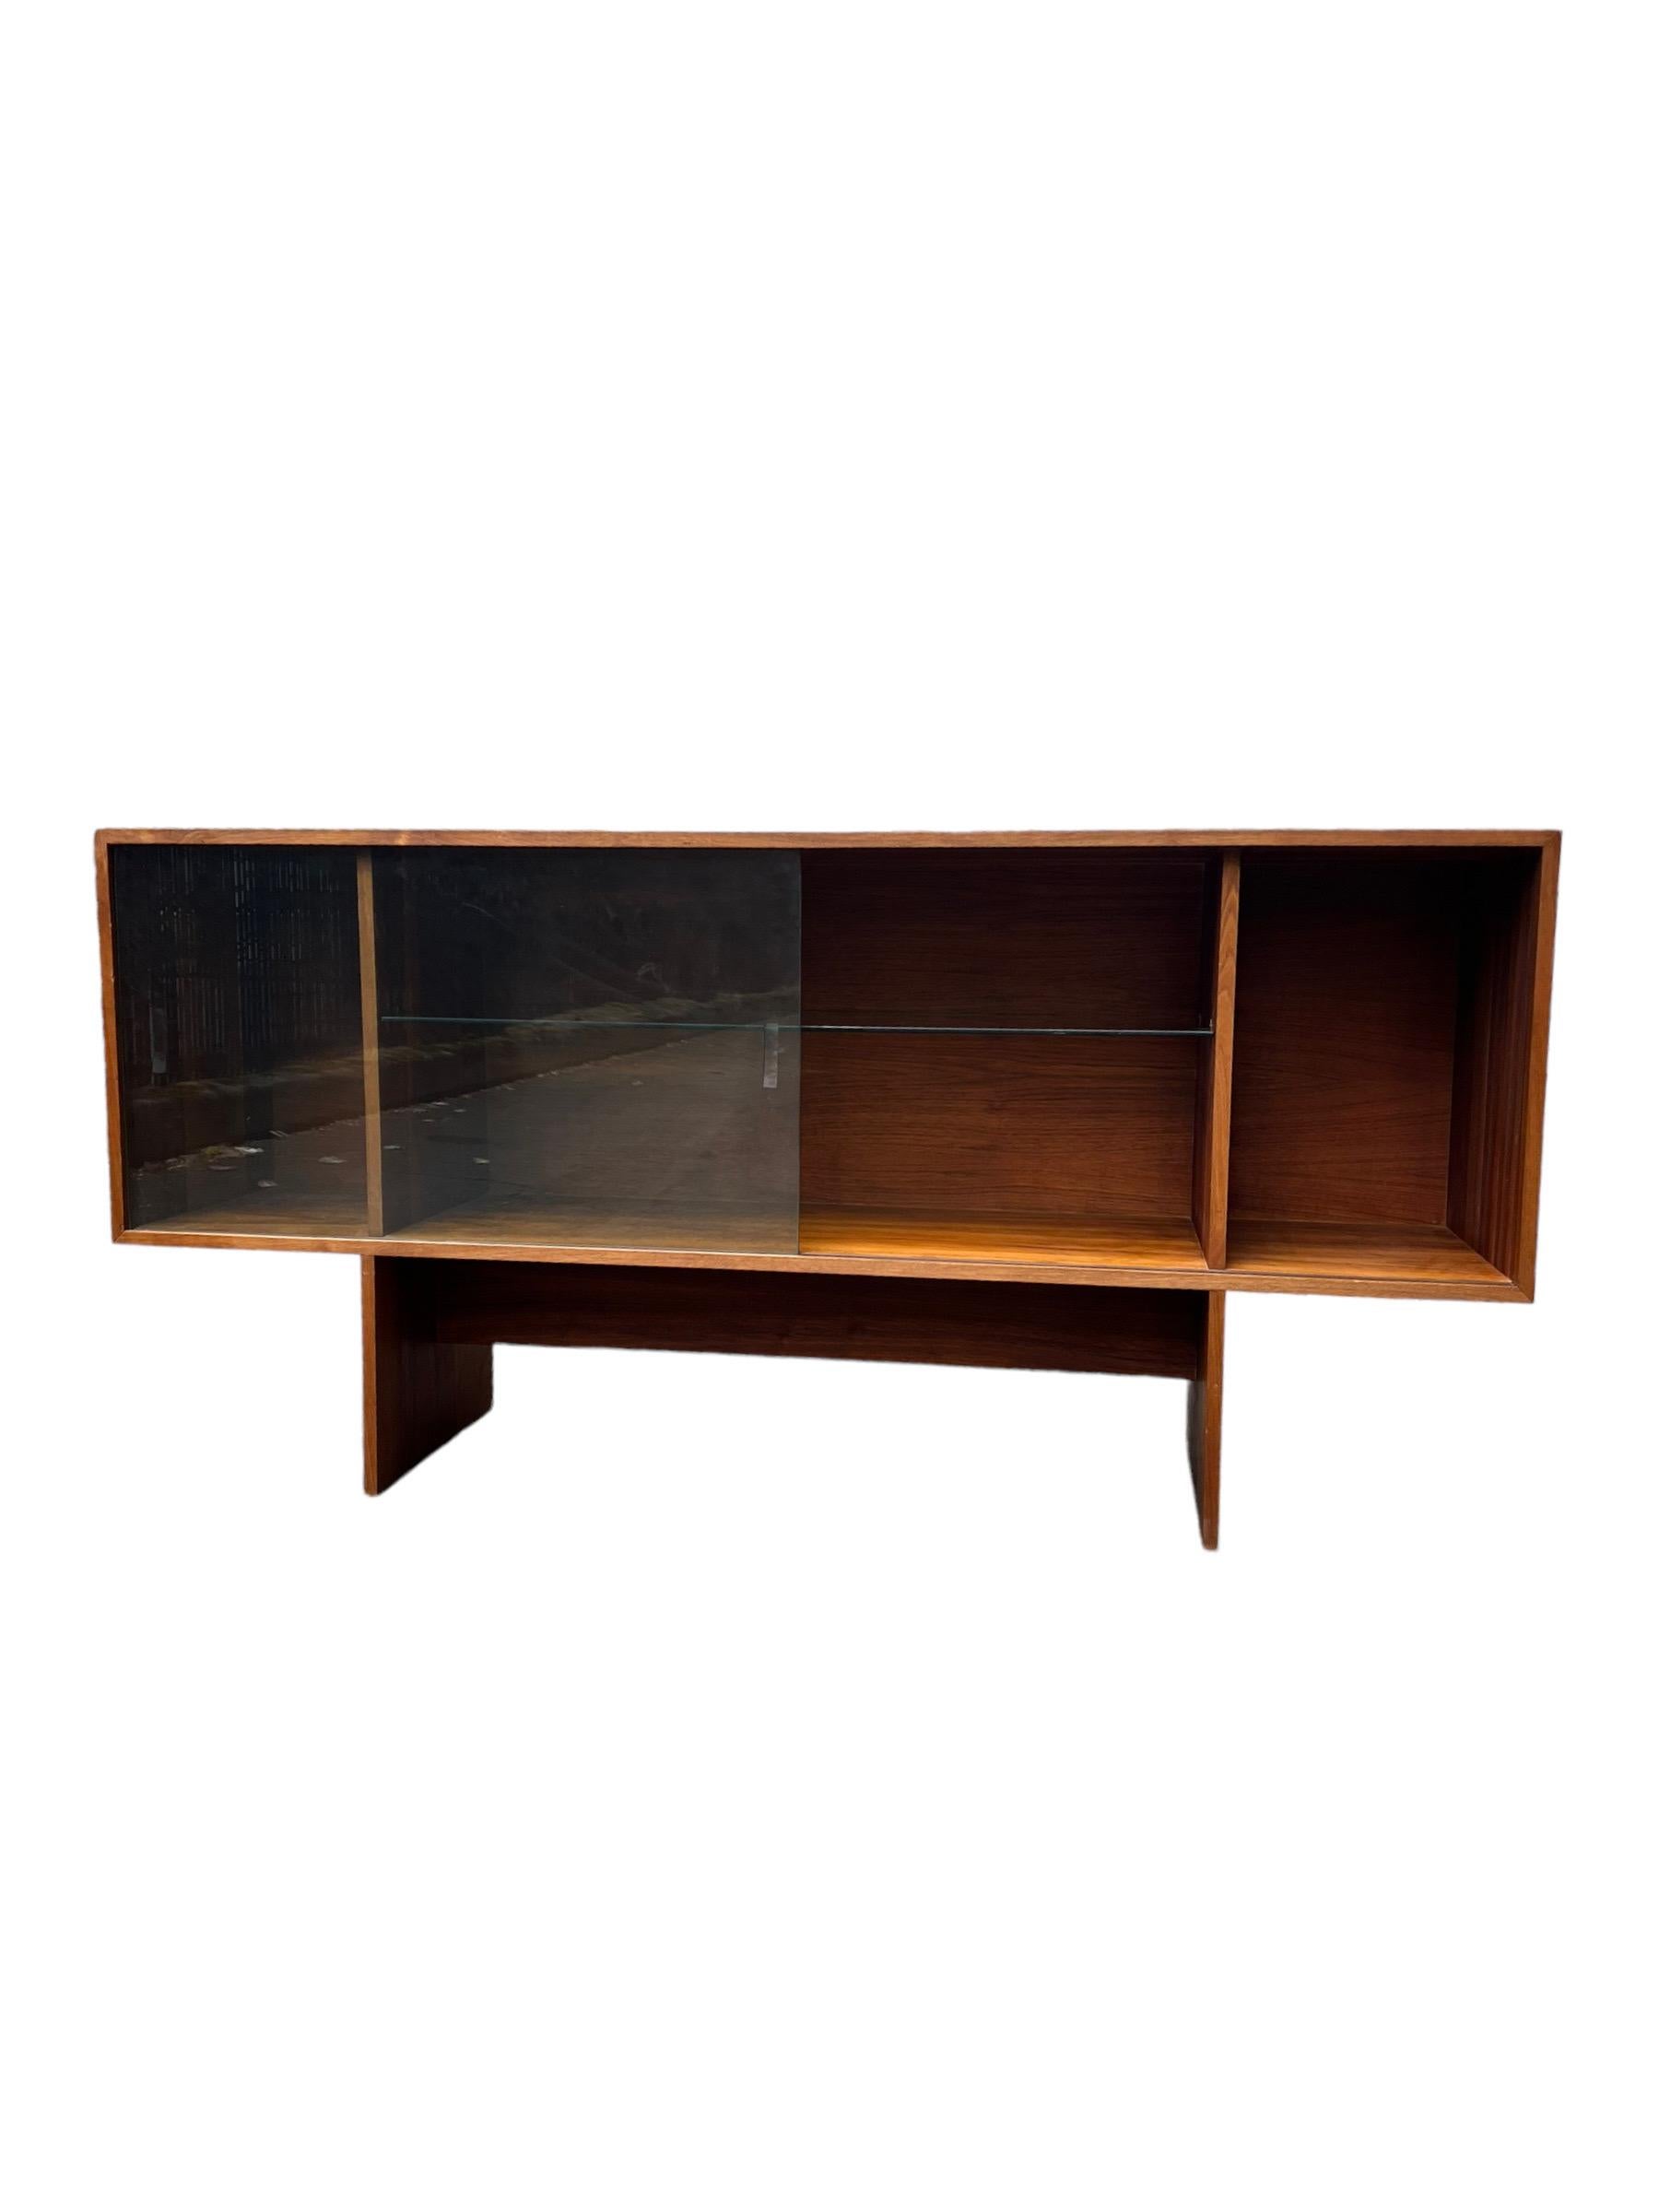 Vintage Mid Century Modern Walnut Wood Book Shelf Display Cabinet Adjustable Shelf

Dimensions. 66 W ; 15 1/2 D ; 32 H
Inside ( Right ). 12 W ; 14 D ; 18 1/2 H
Inside ( Center ). 39 W ; 14 D ; 18 1/2 H
Inside ( Left ). 12 W ; 14 D ; 18 1/2 H